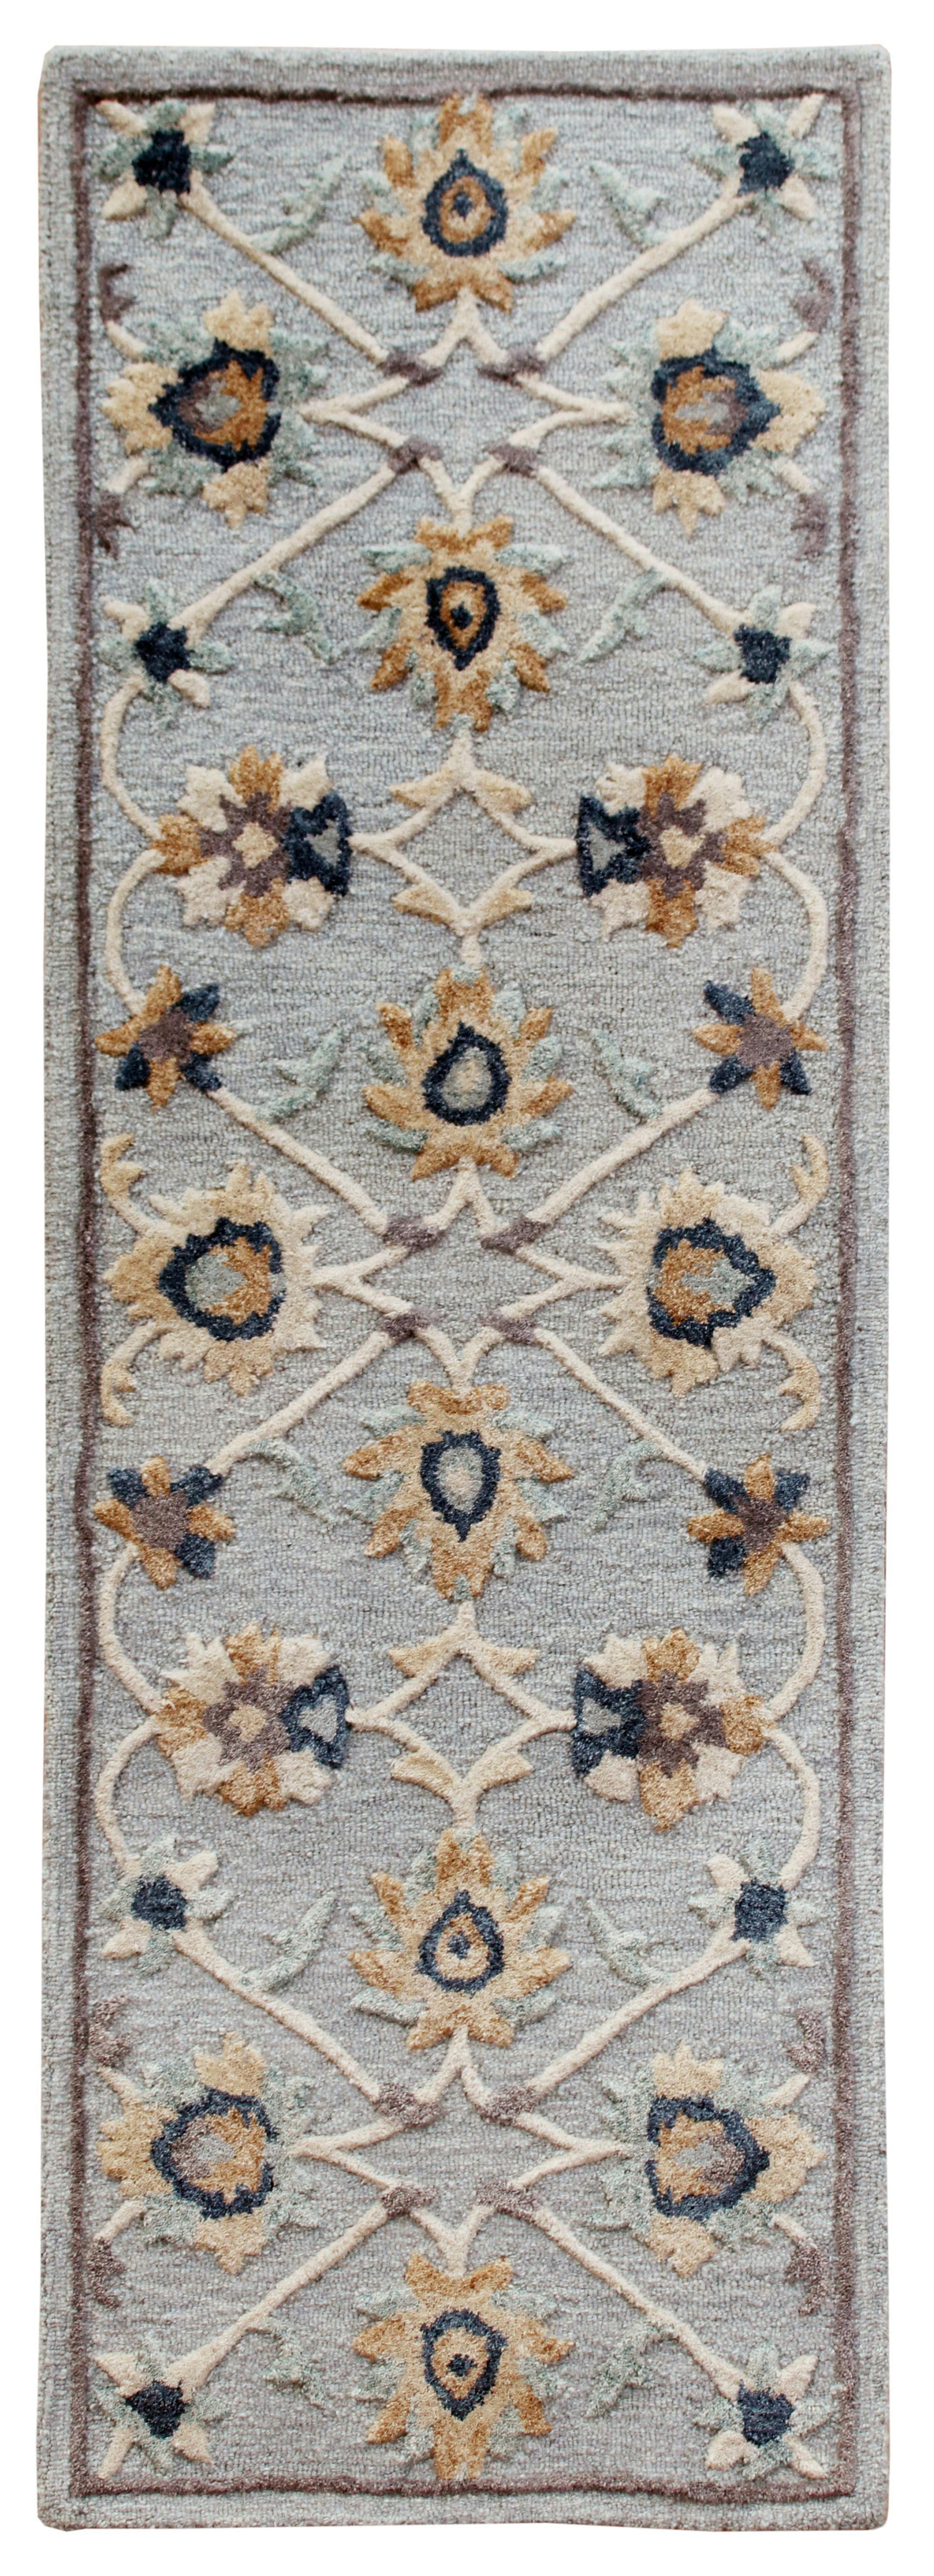 Handmade Tufted Wool Runner Rug, 2'3" x 6'9", Blue Stain-Resistant